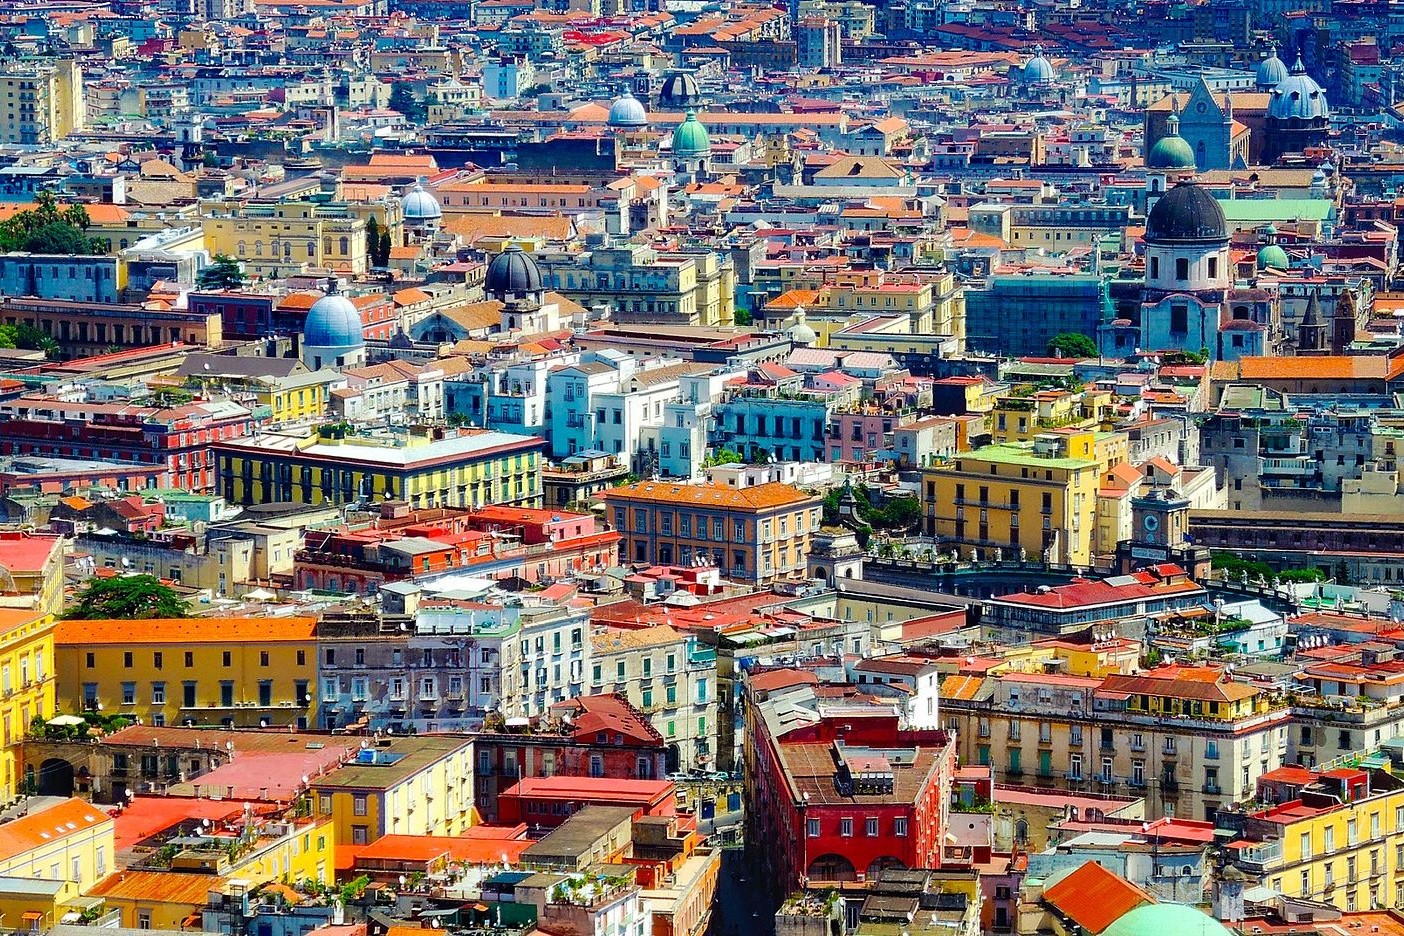 Rome to Pompeii: A view beautiful of Naples